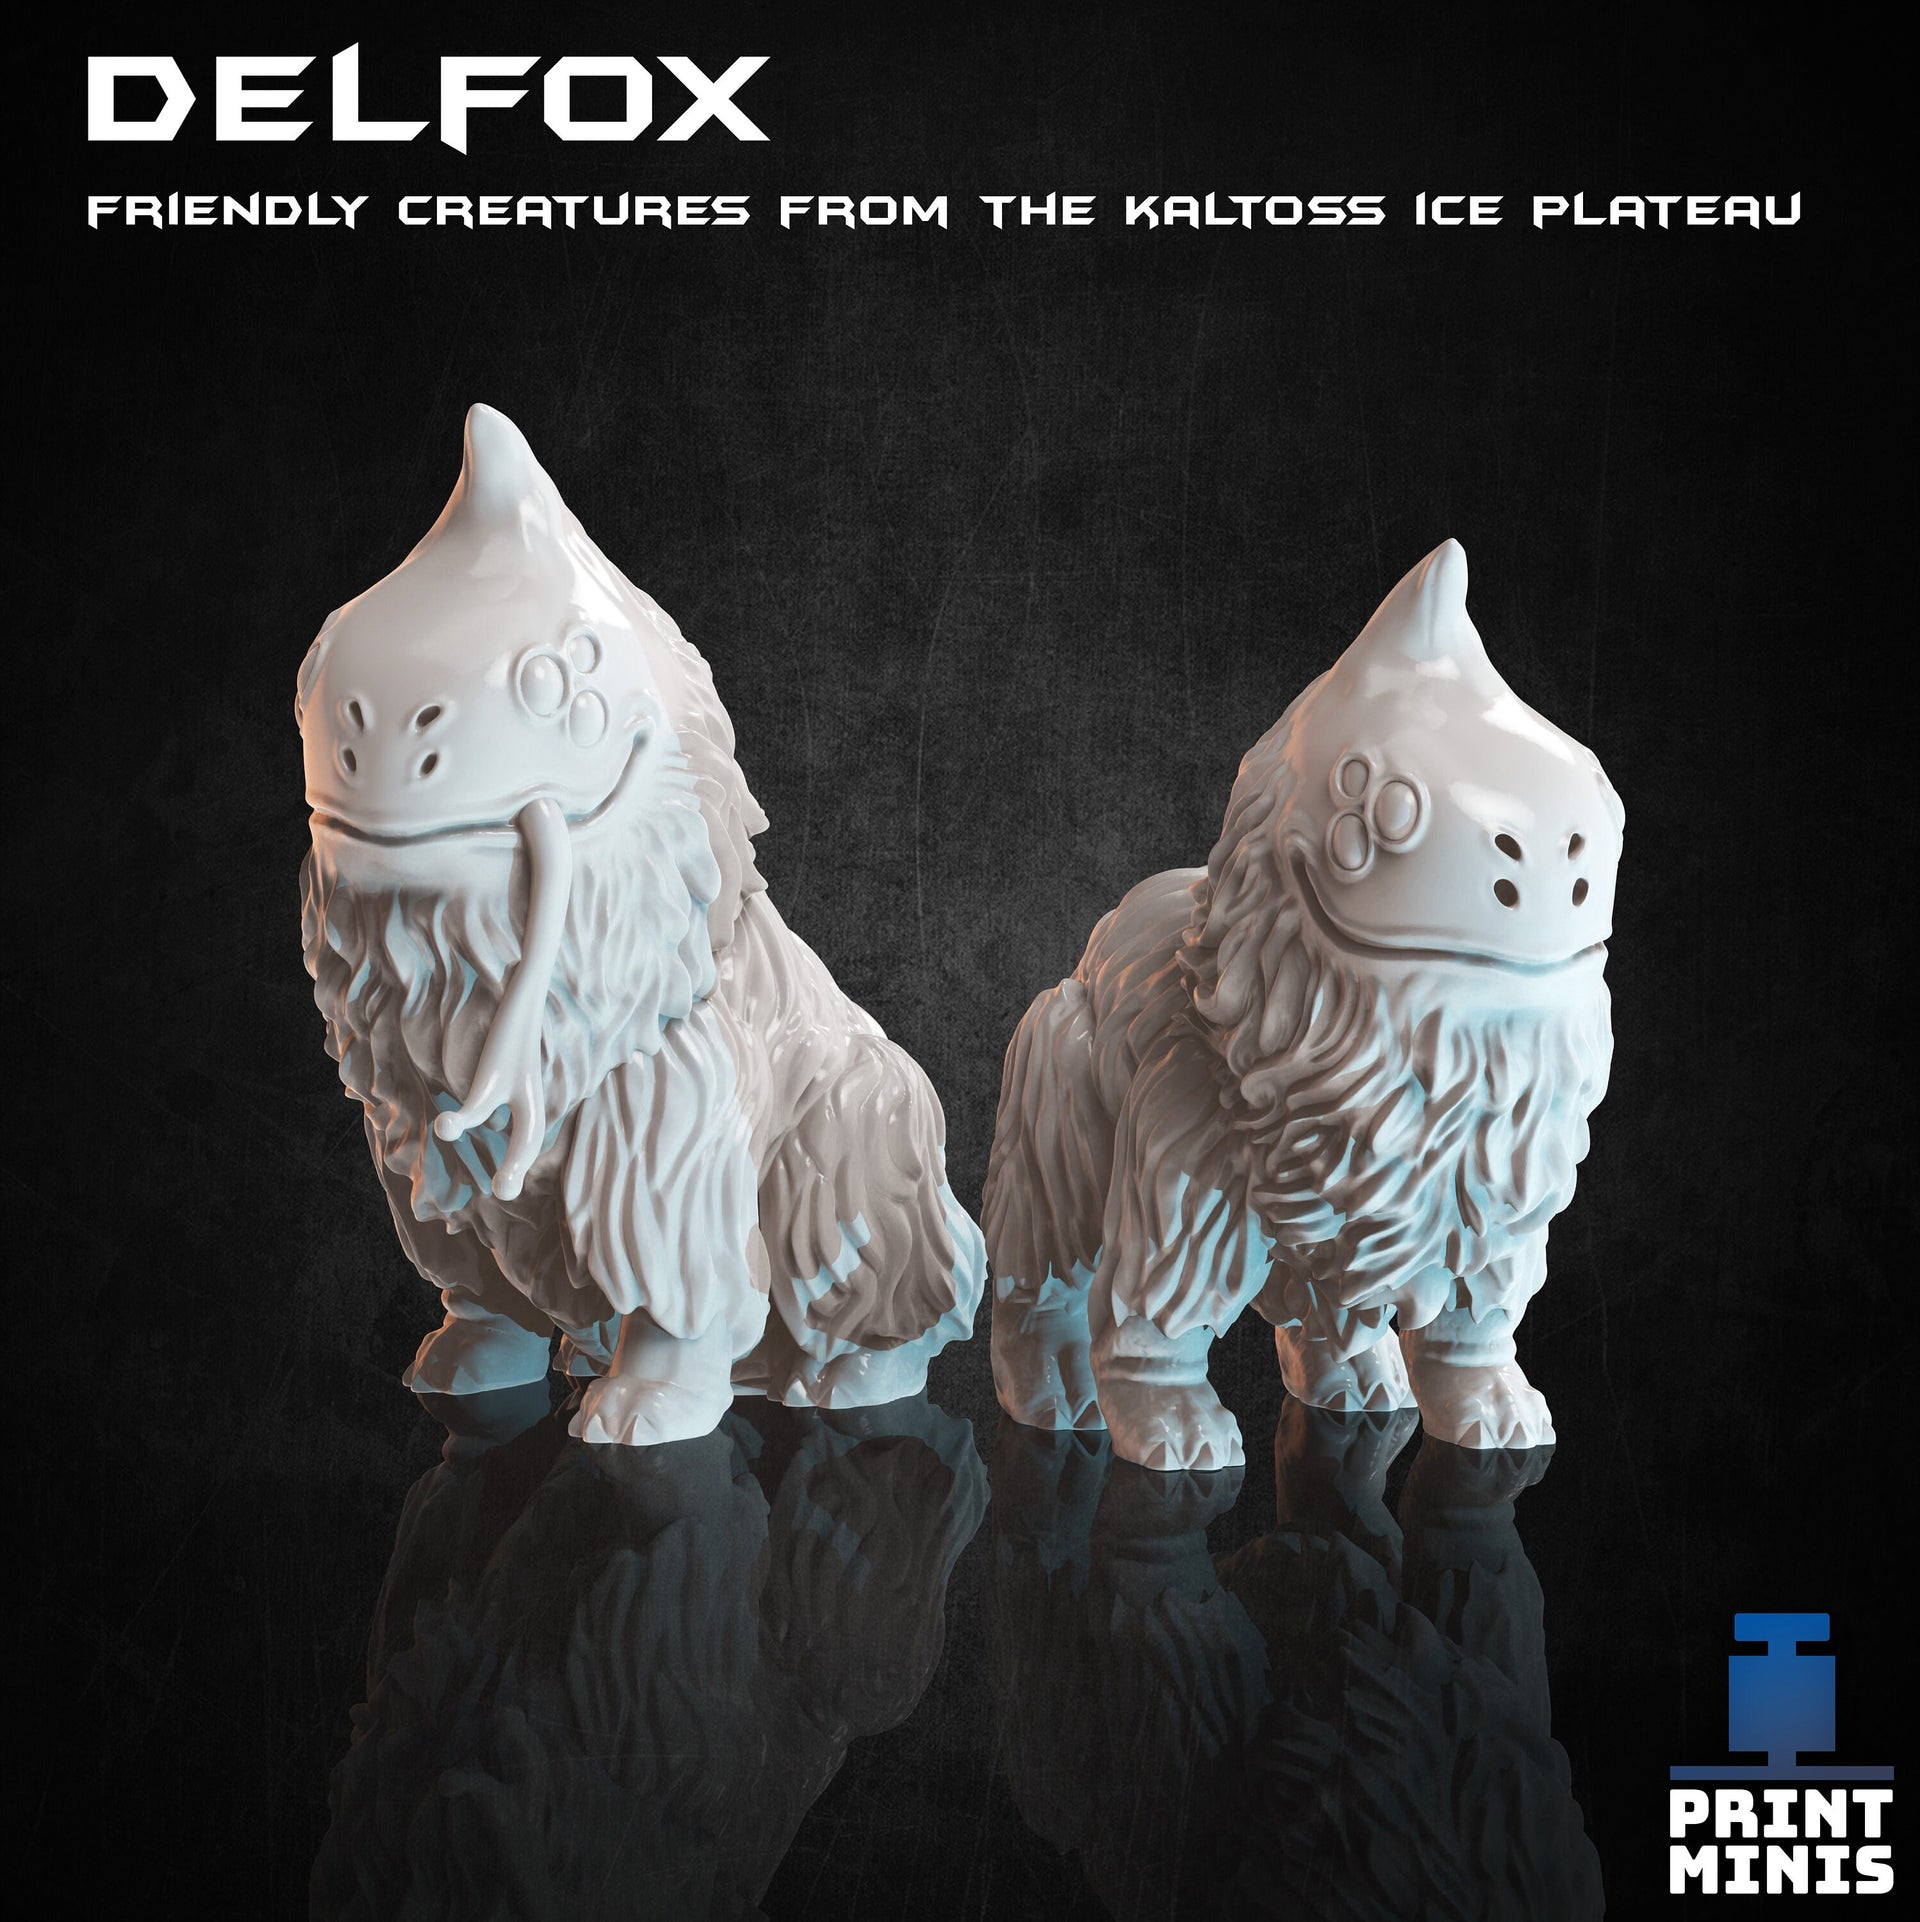 Delfox Snow Creature - Print Minis 